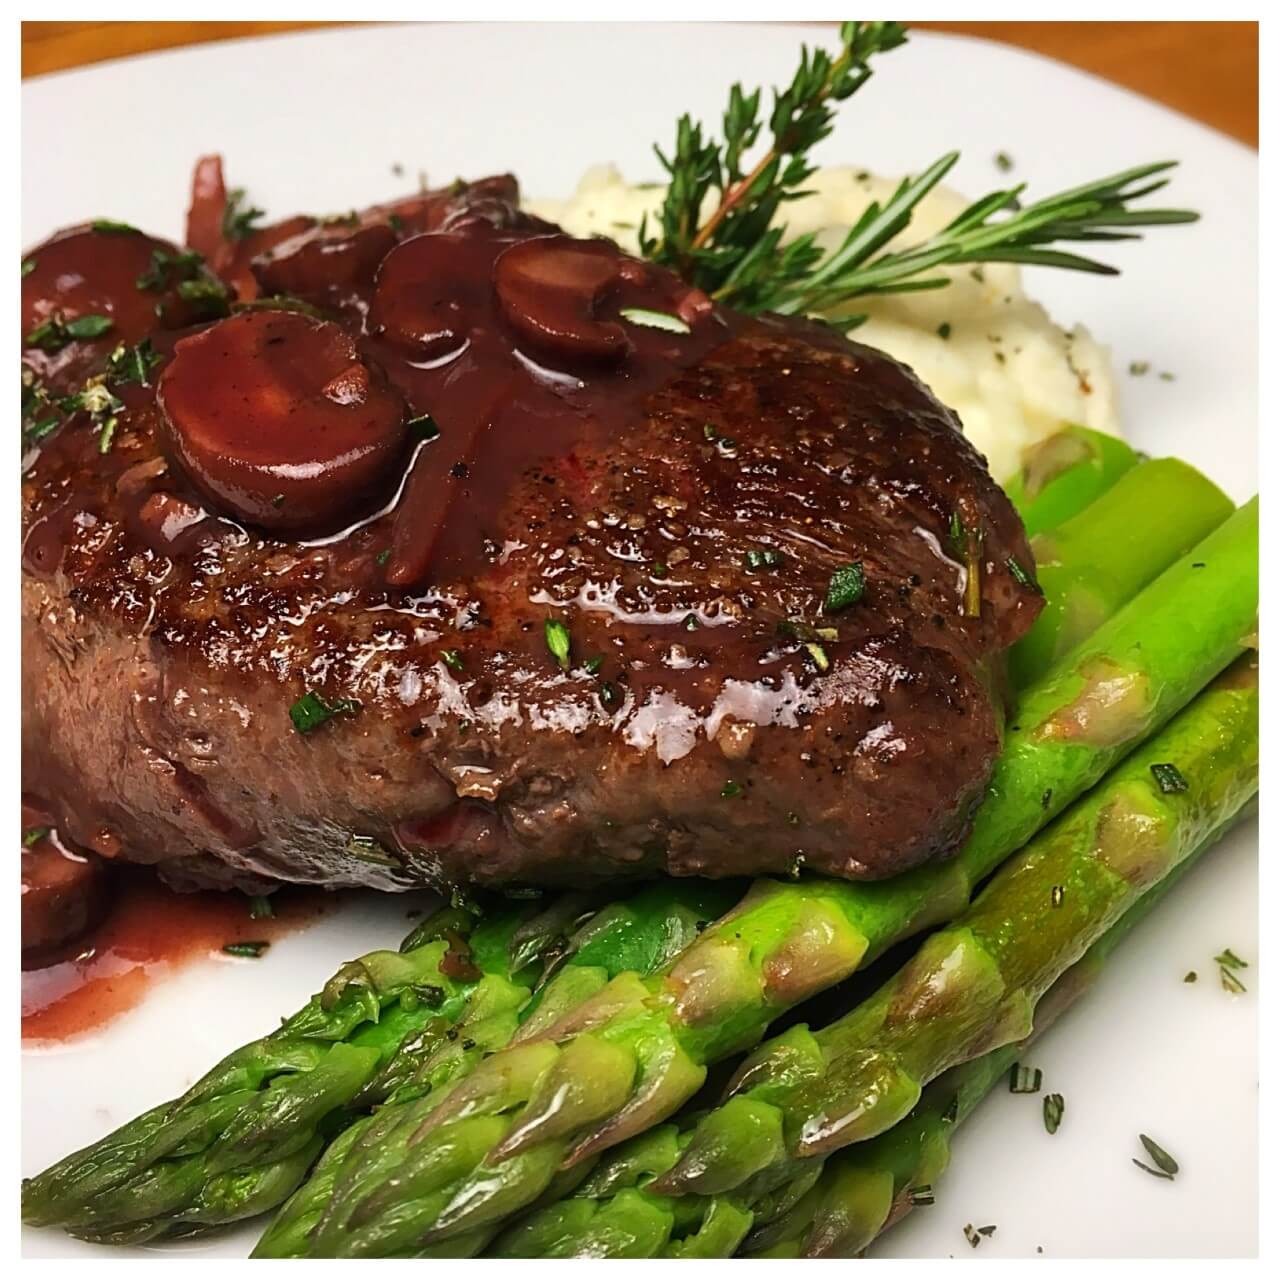 https://www.nonamesteaks.com/wp-content/uploads/2018/12/STEAK-Red-WIne-Steak.jpg